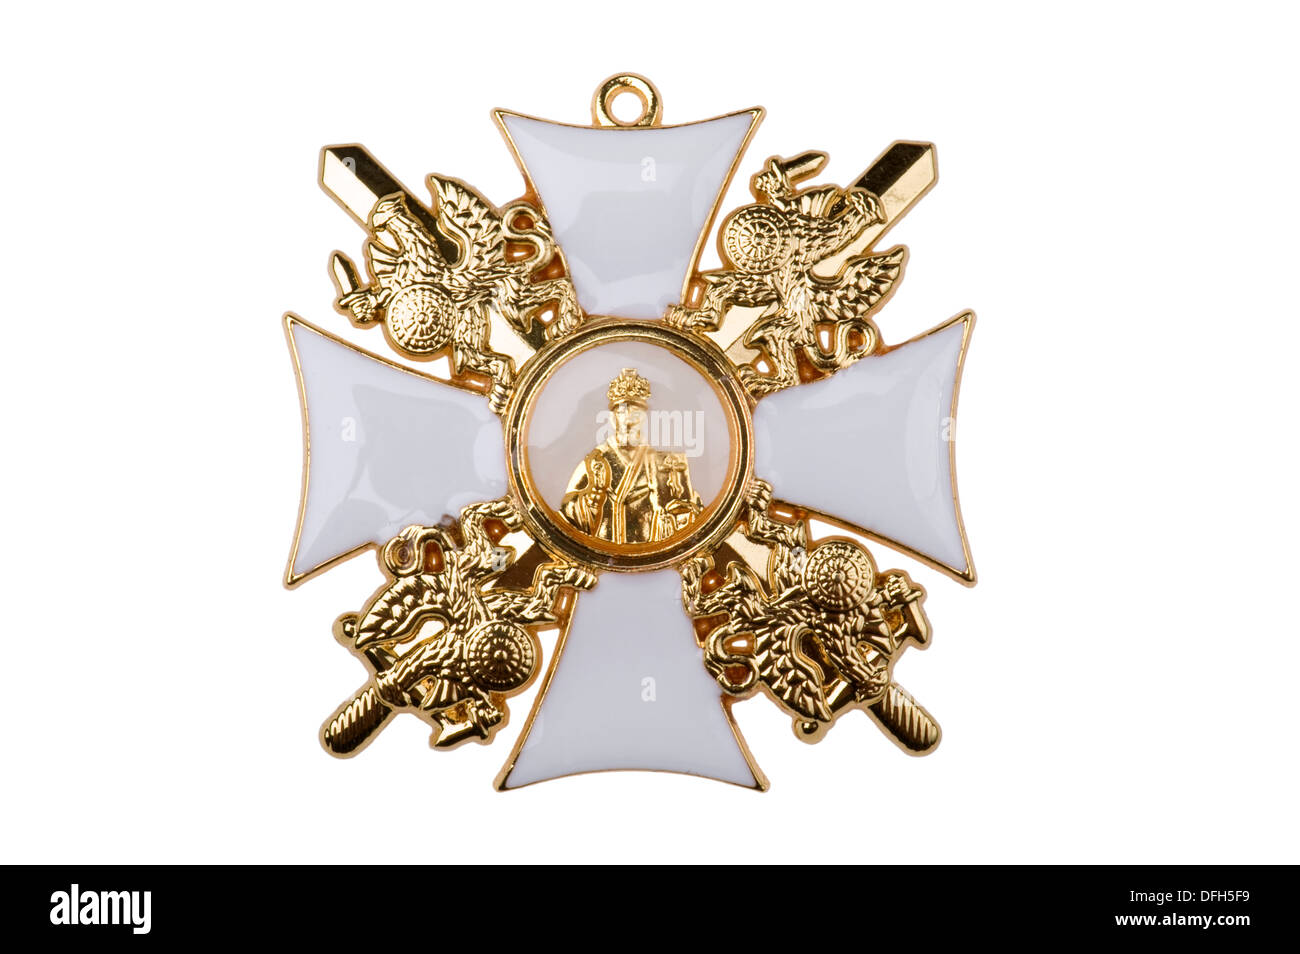 Awards de l'Empire russe de l'insigne de l'Ordre de Saint Nicolas Banque D'Images